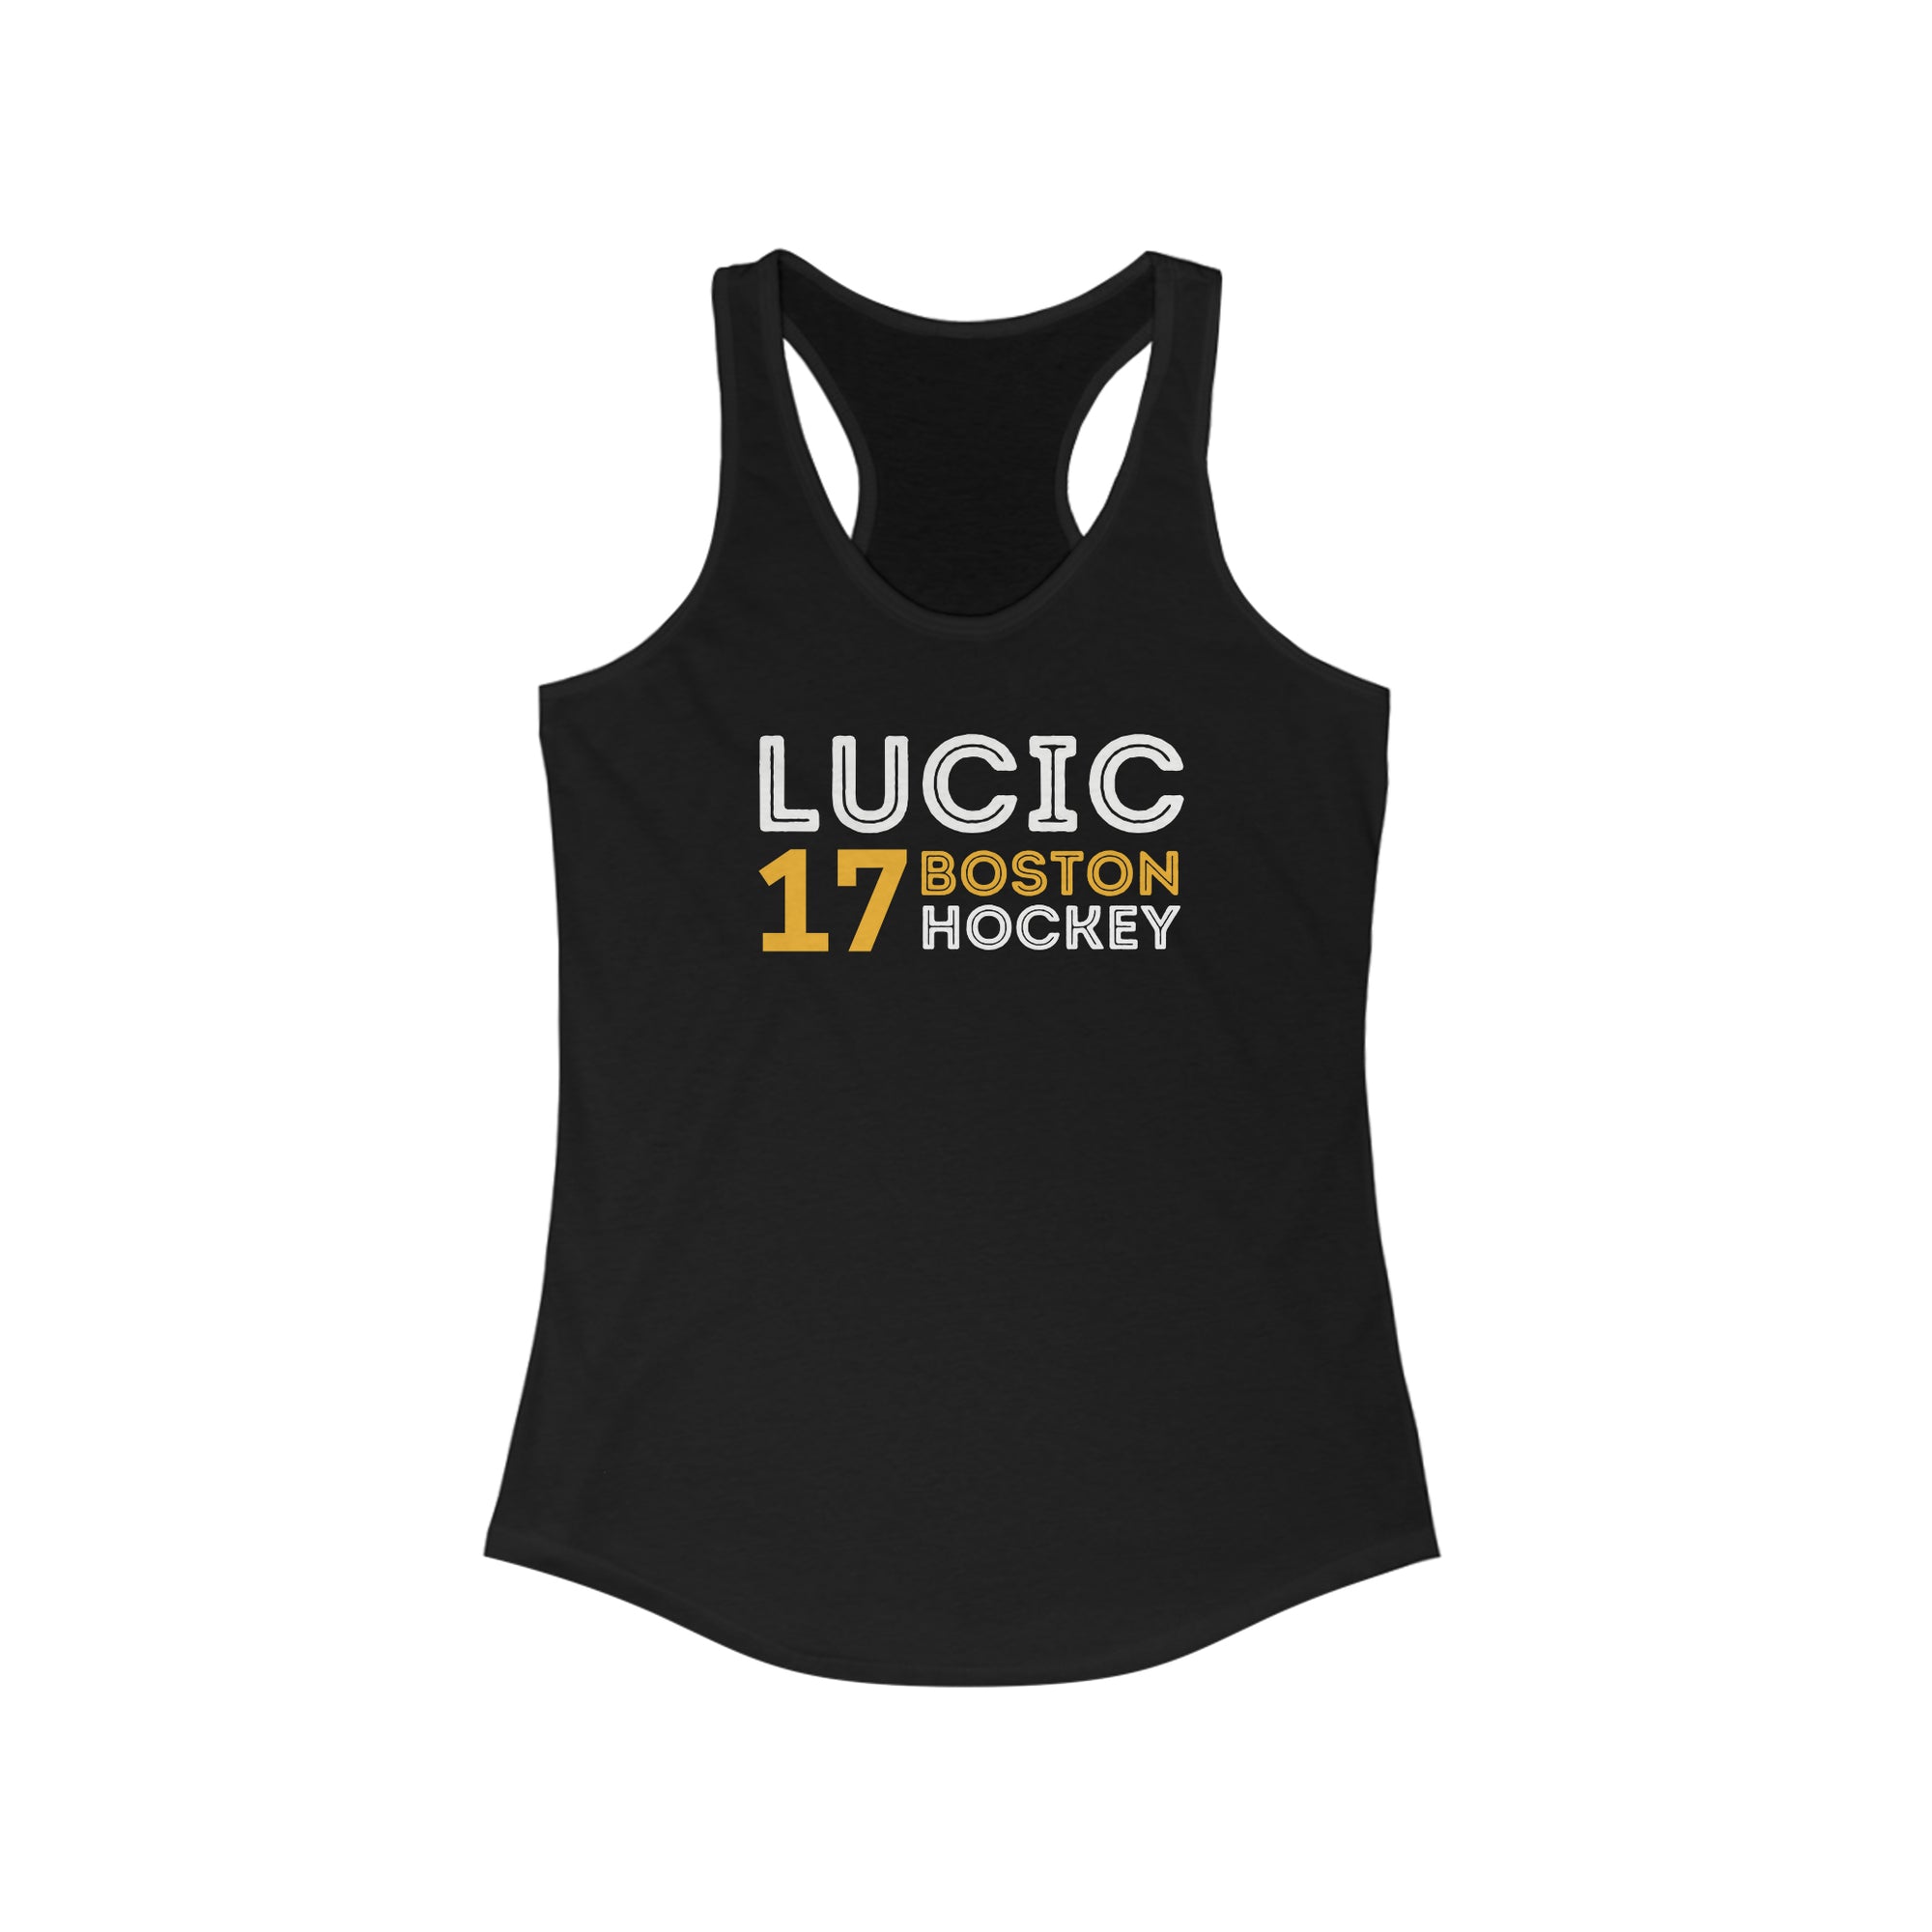 Lucic 17 Boston Hockey Grafitti Wall Design Women's Ideal Racerback Tank Top